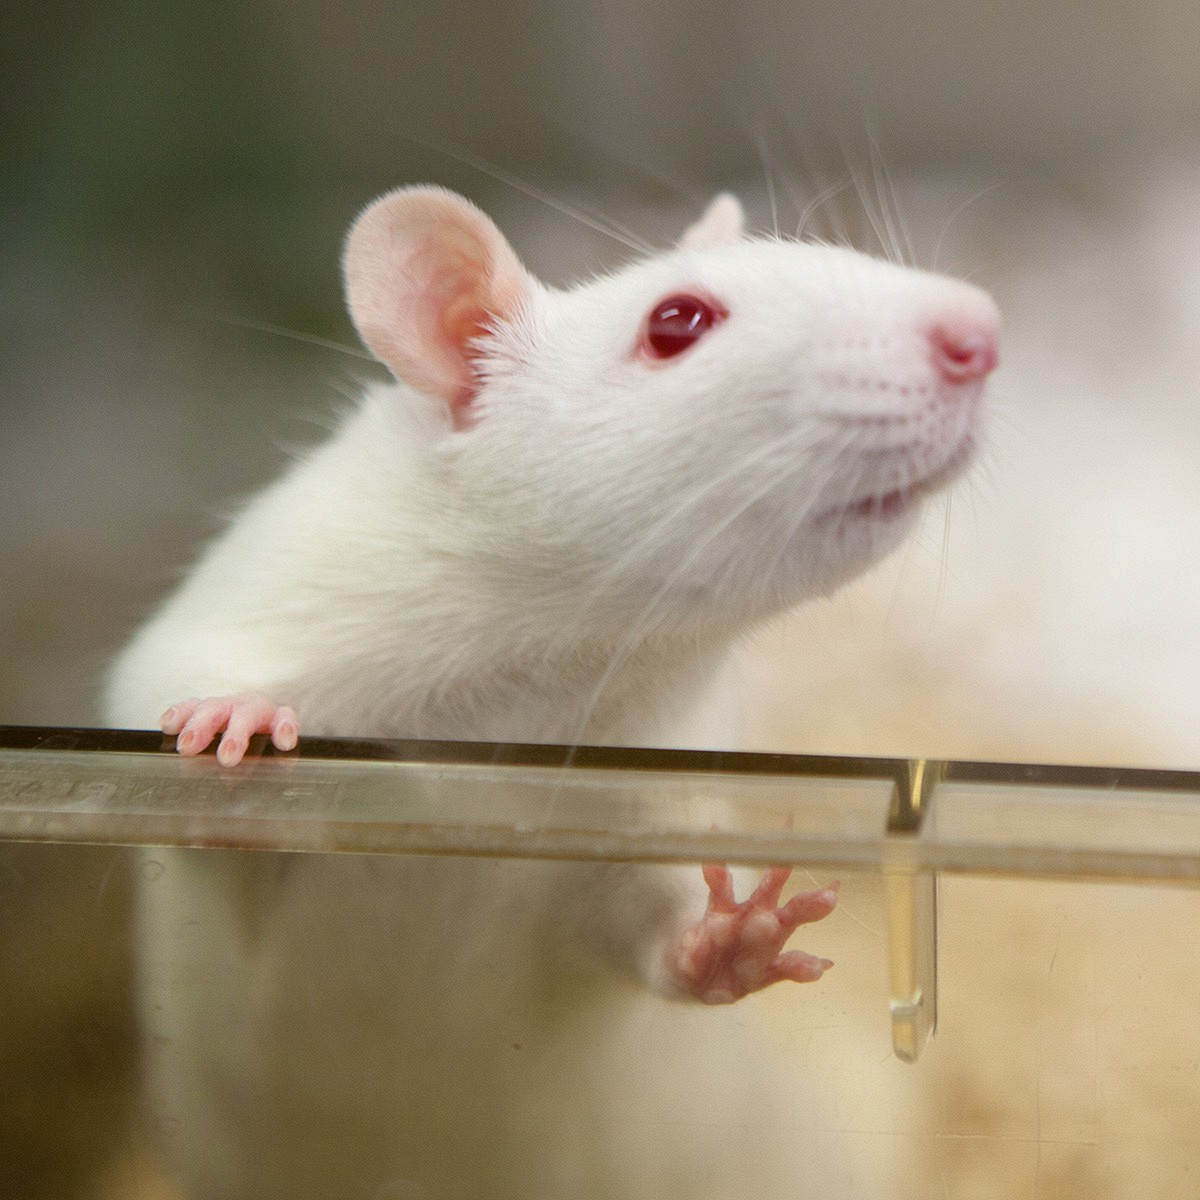 Как работает фонд помощи лабораторным крысам - Афиша Daily